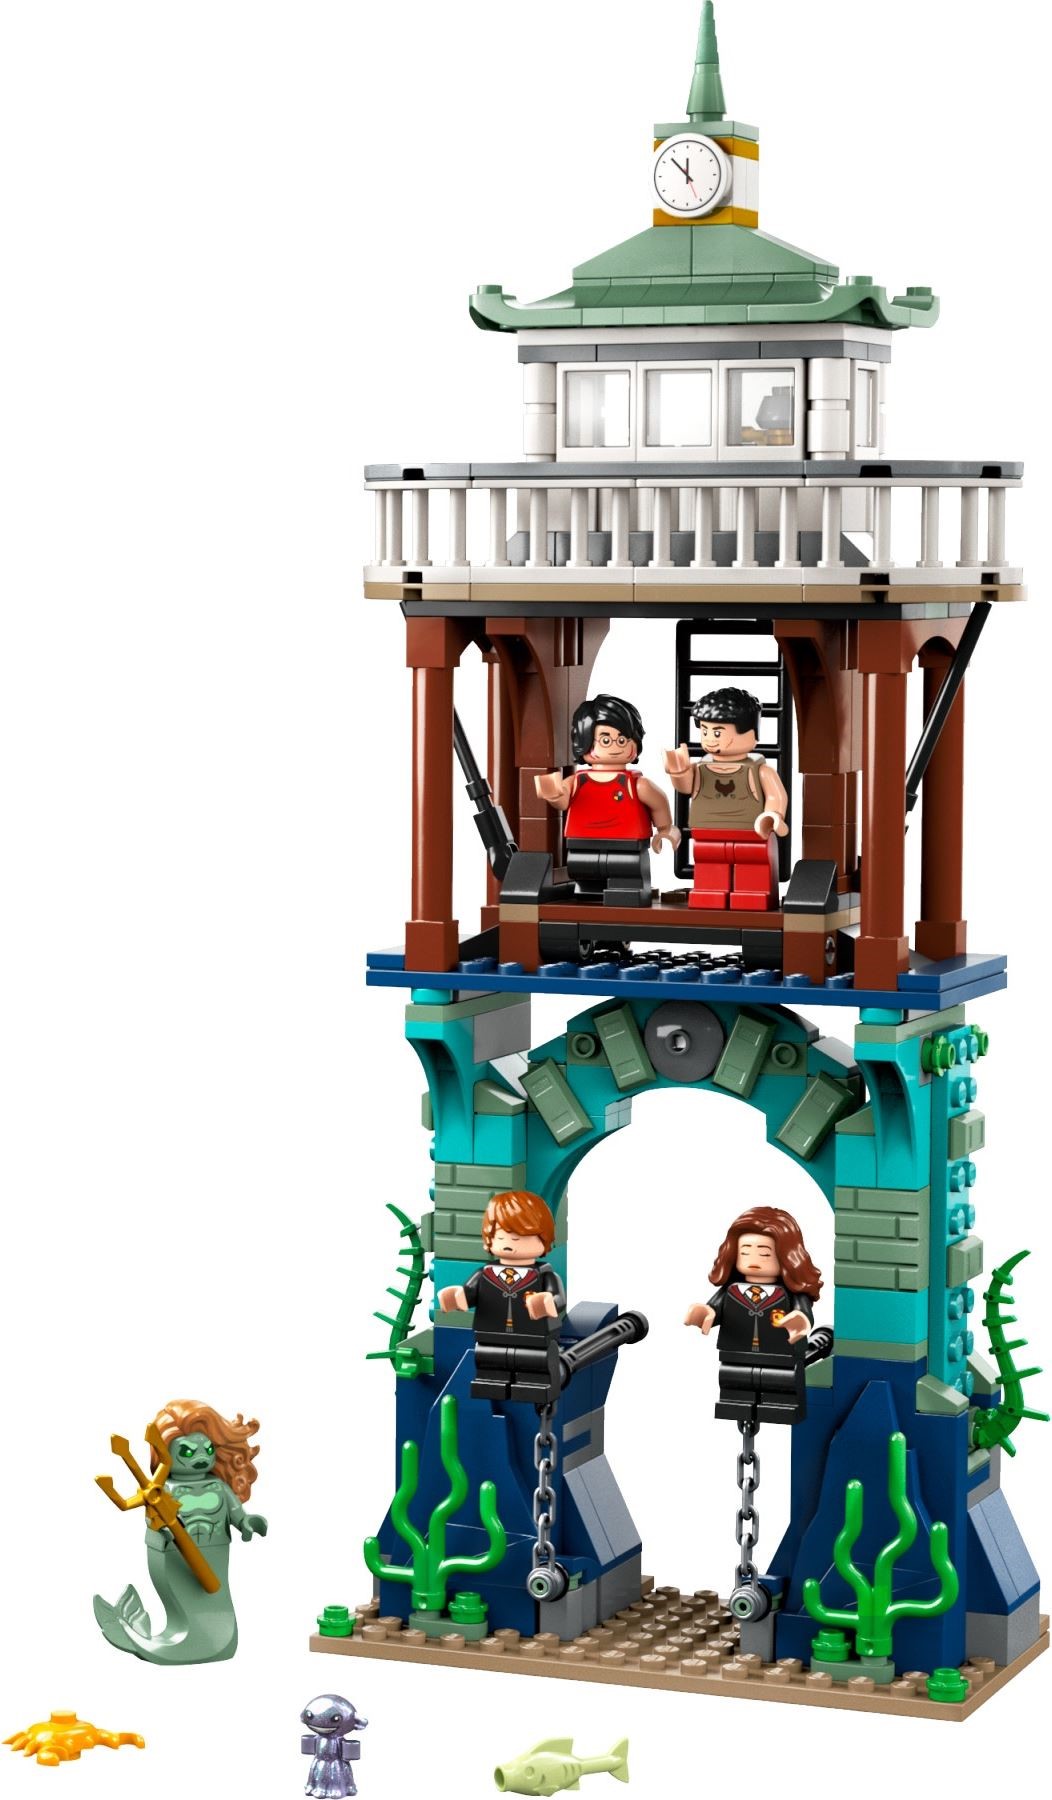 All New Harry Potter LEGO Sets Revealed 